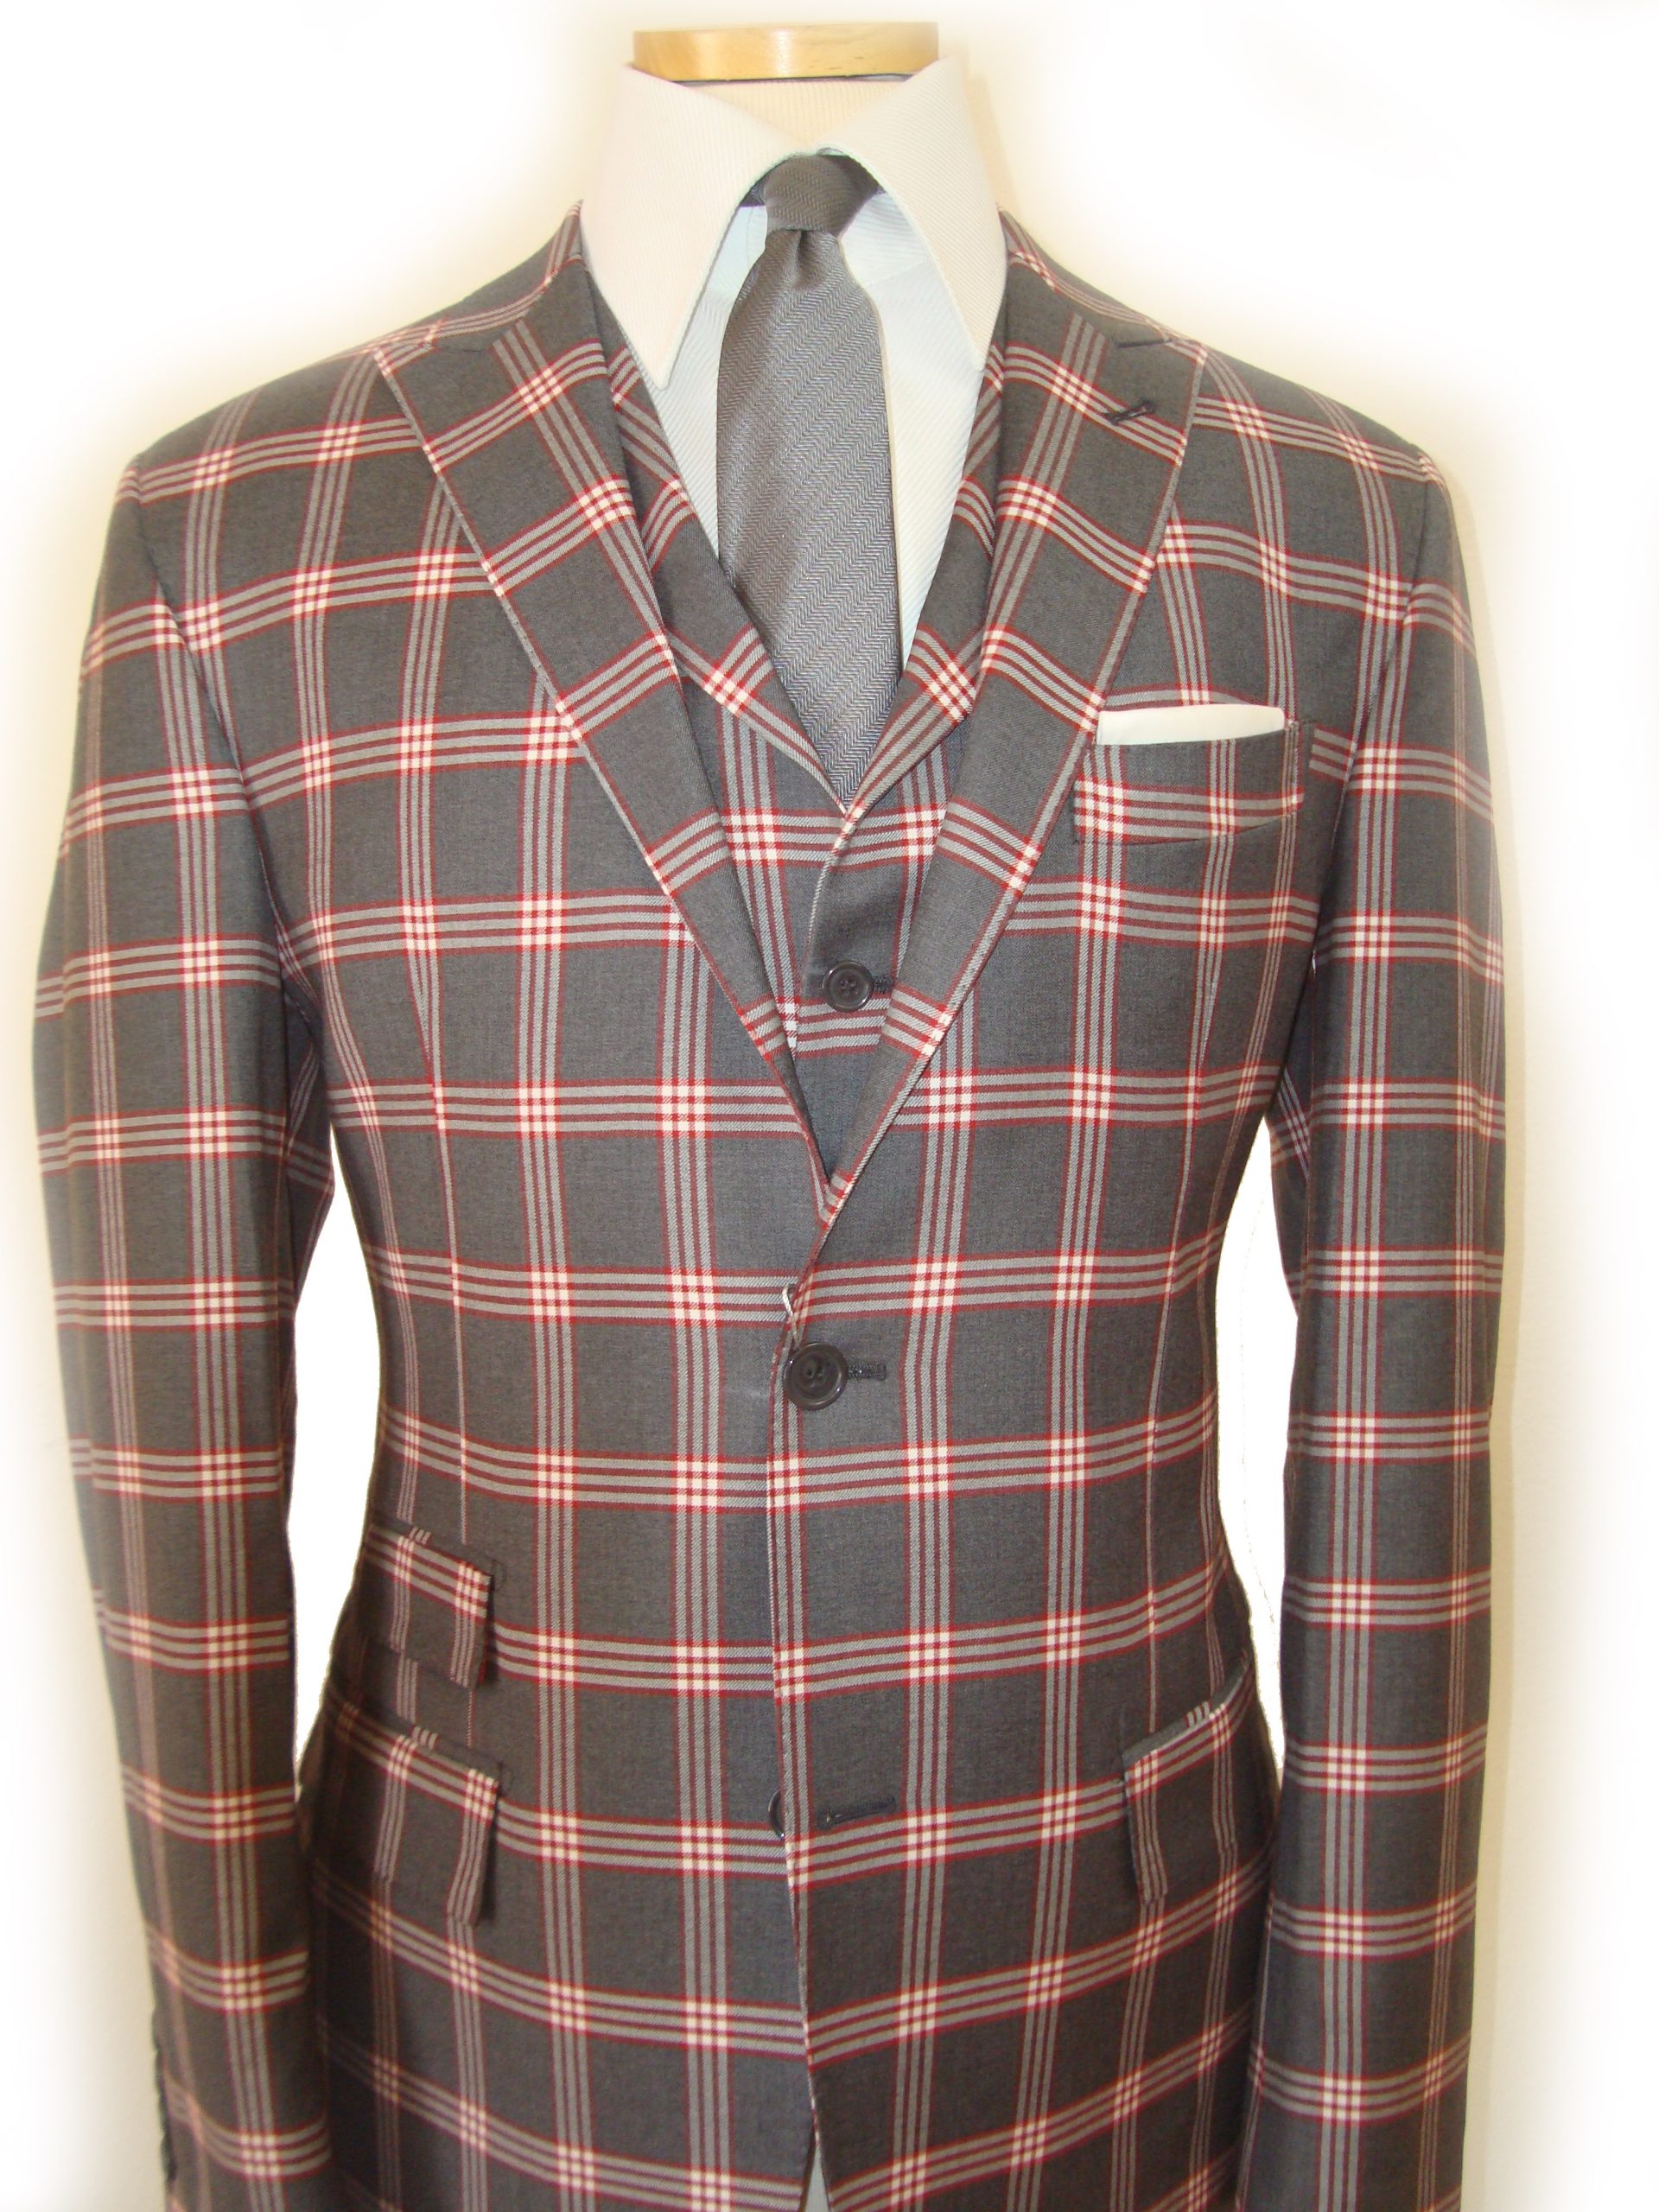 Cerrutti Burberry Plaid Suit - Winston 